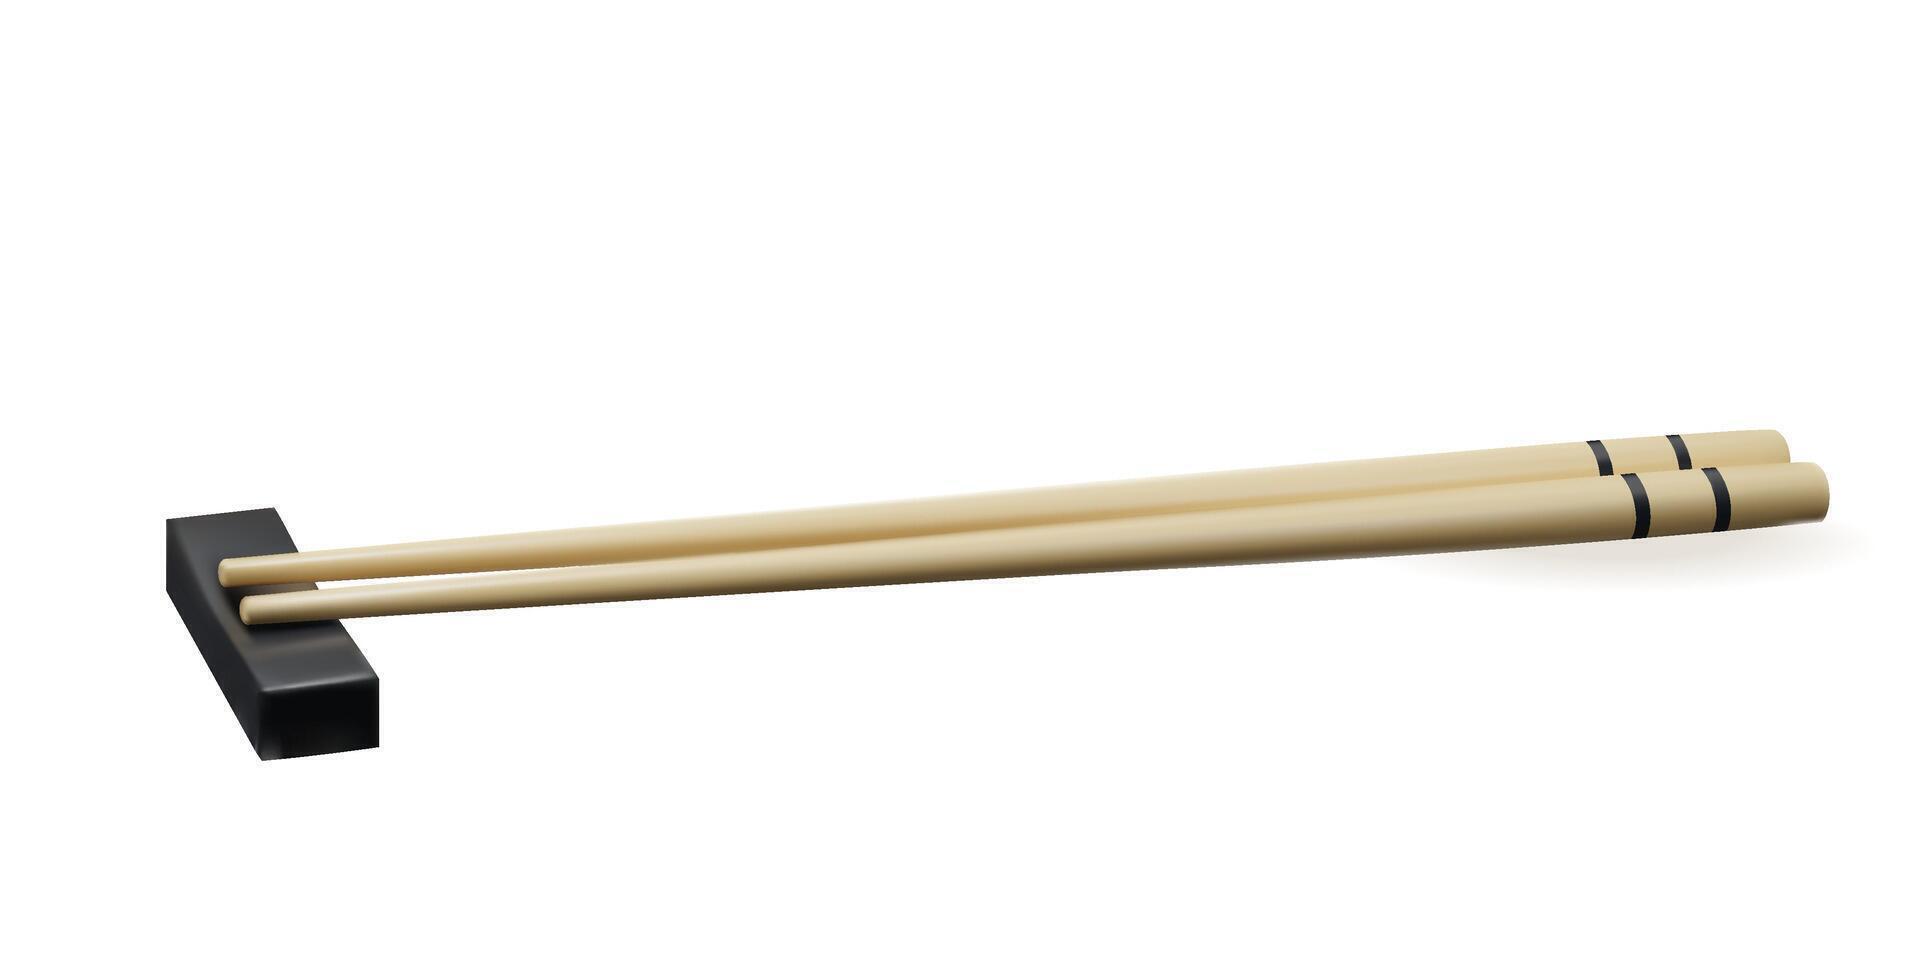 realista 3d comida bambú palillos, vector ilustración aislado en blanco antecedentes. par de Sushi palos tradicional de madera utensilio para asiático alimento.